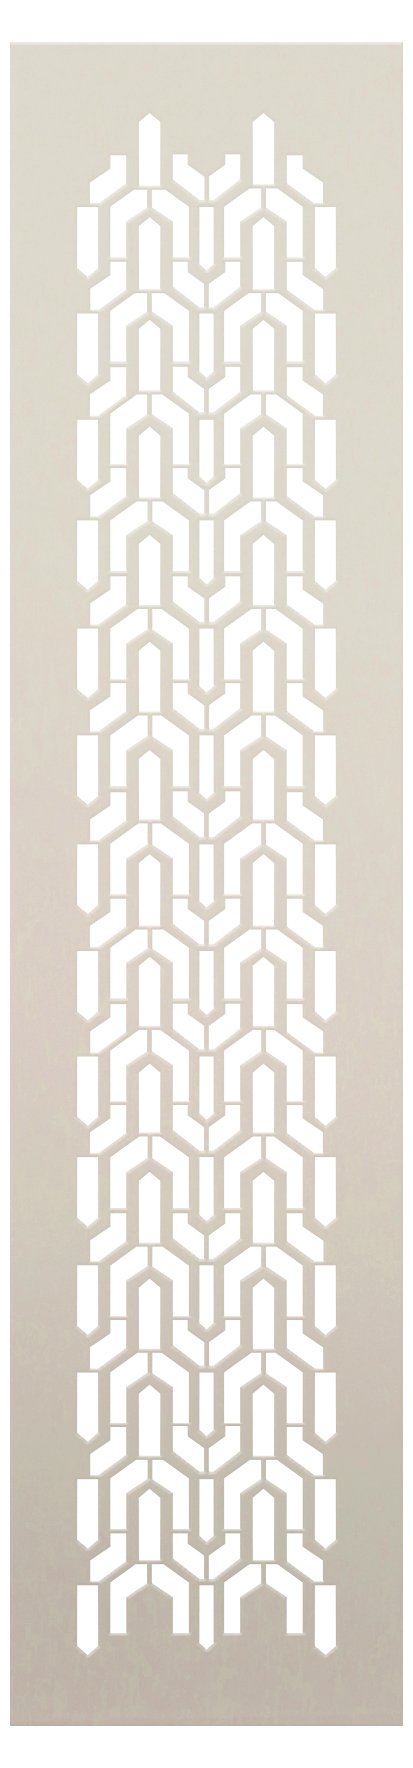 Arabian Steeple Mosaic Band Stencil by StudioR12 | Craft DIY Backsplash Pattern Home Decor | Reusable Mylar Template | Paint Wood Sign | Select Size | STCL5432